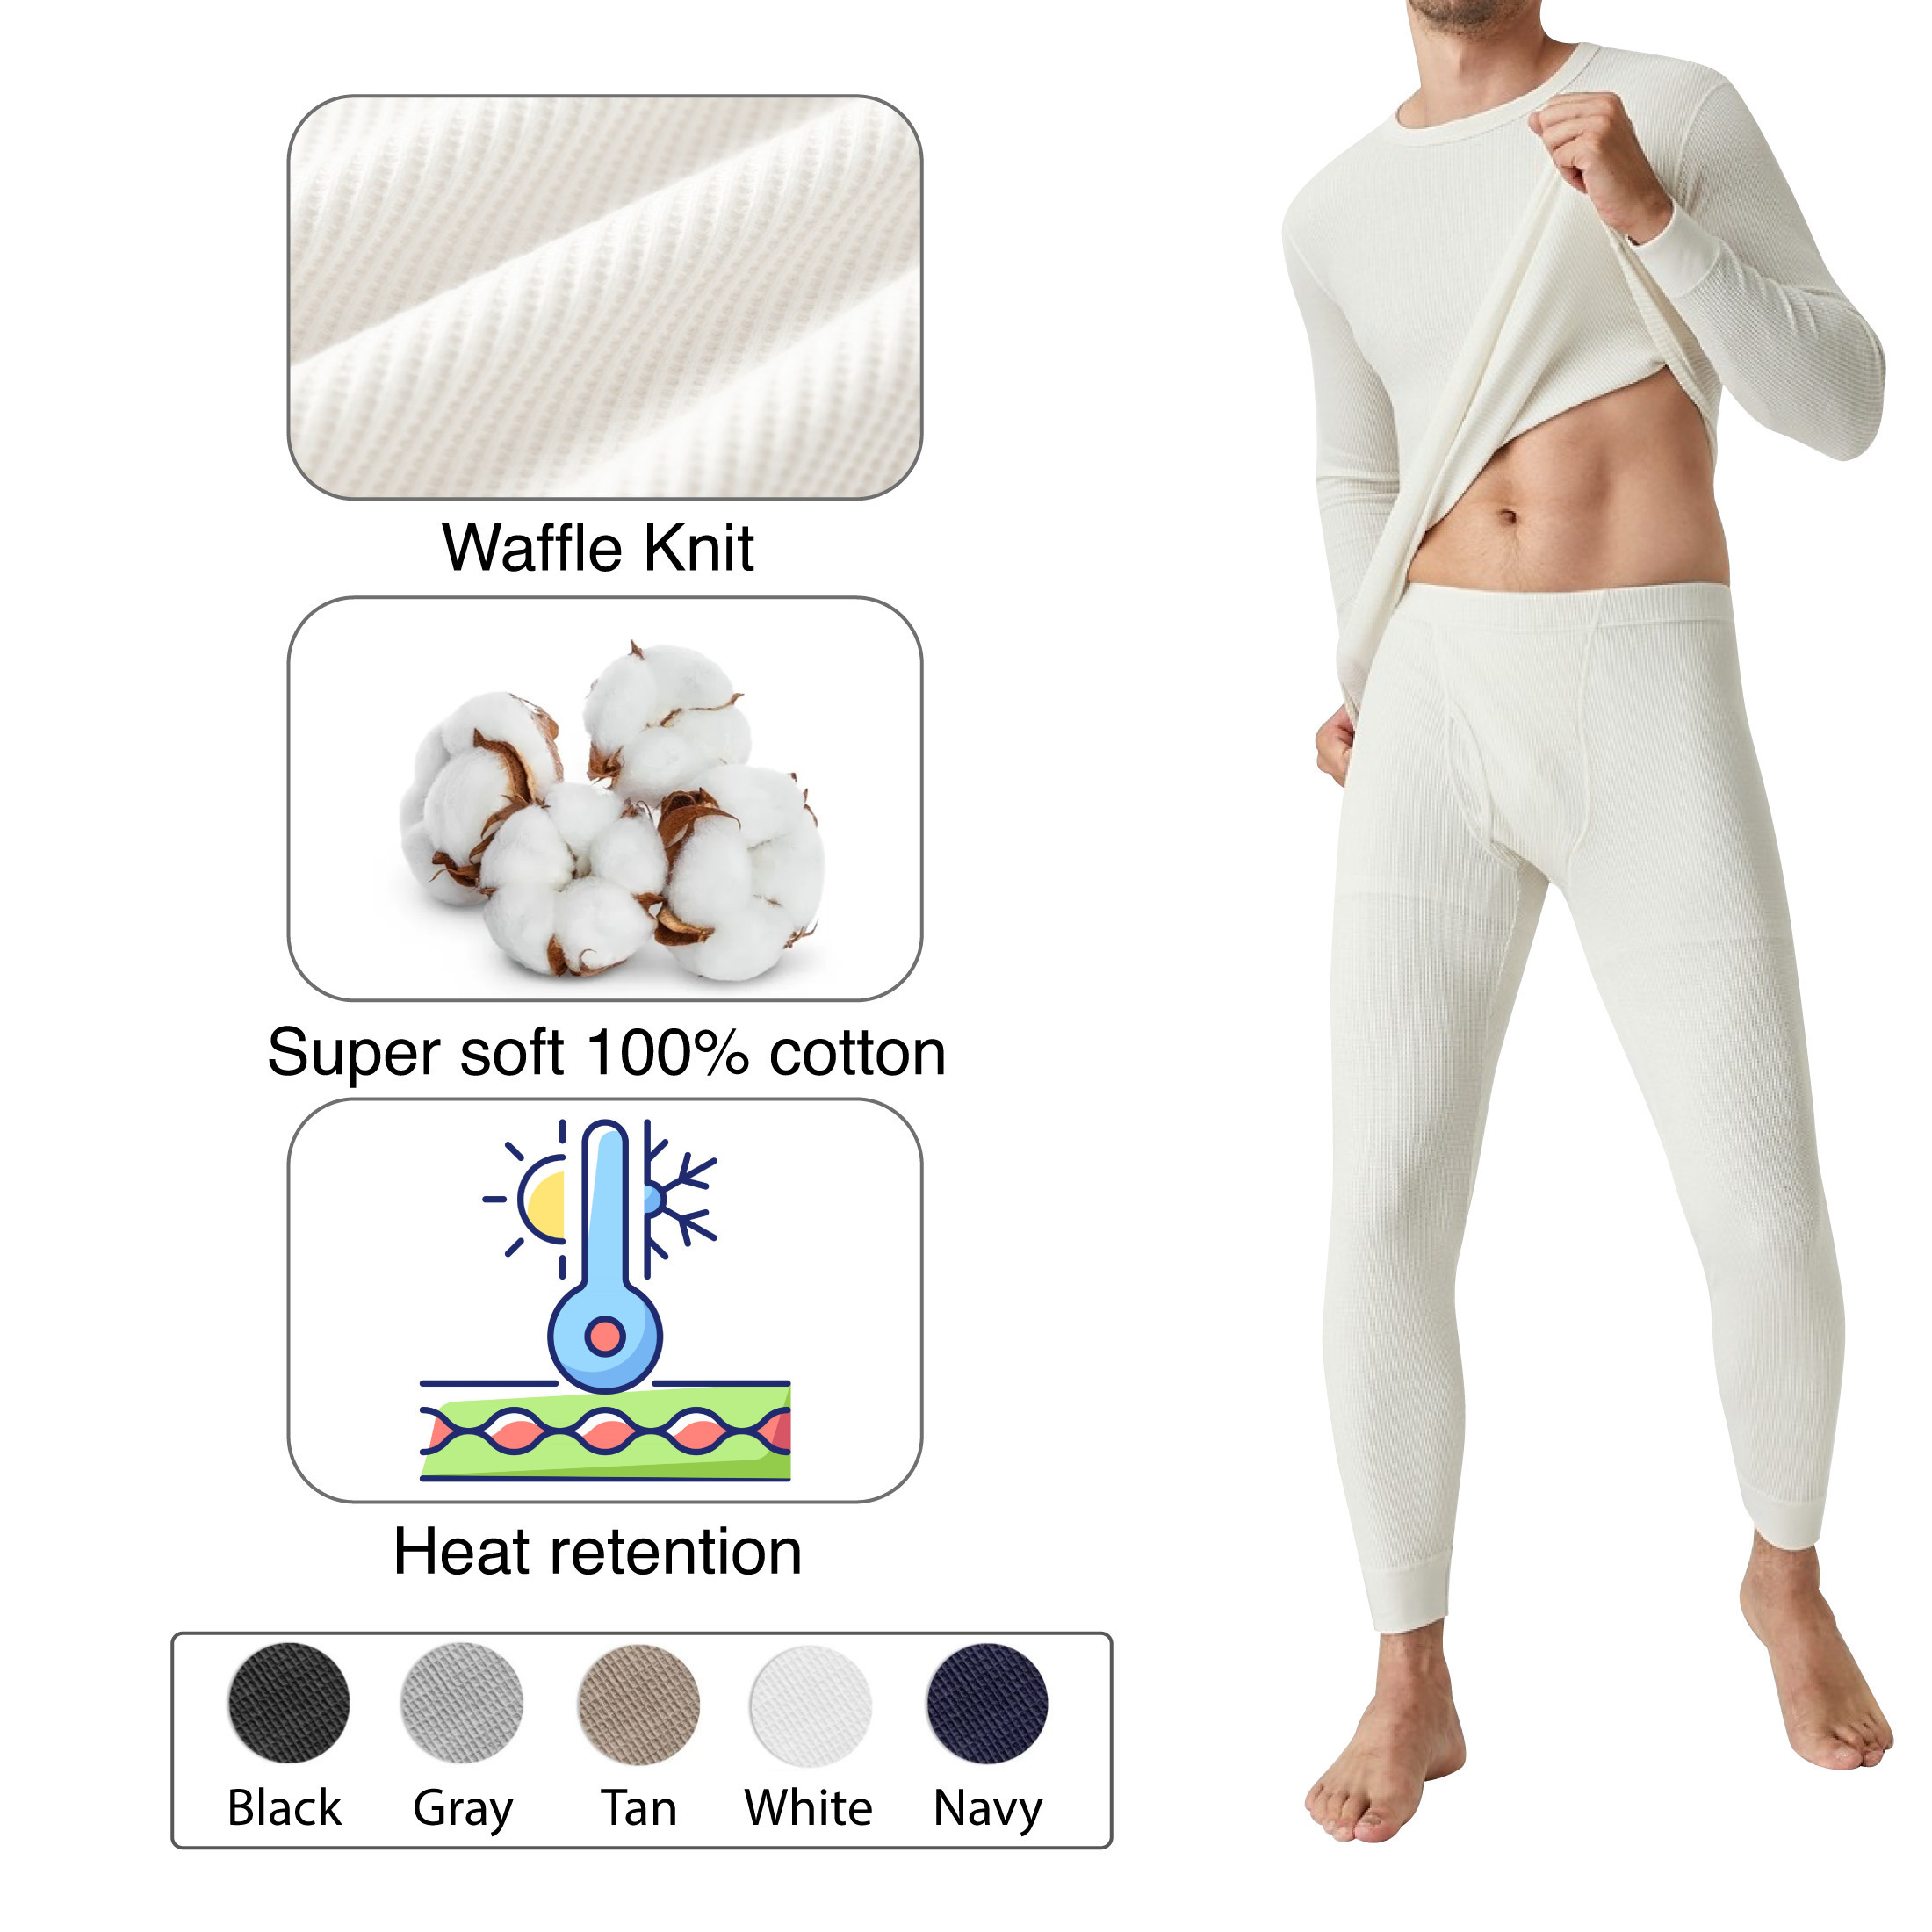 2-Piece: Men's Super Soft Cotton Waffle Knit Winter Thermal Underwear Set - White, Small